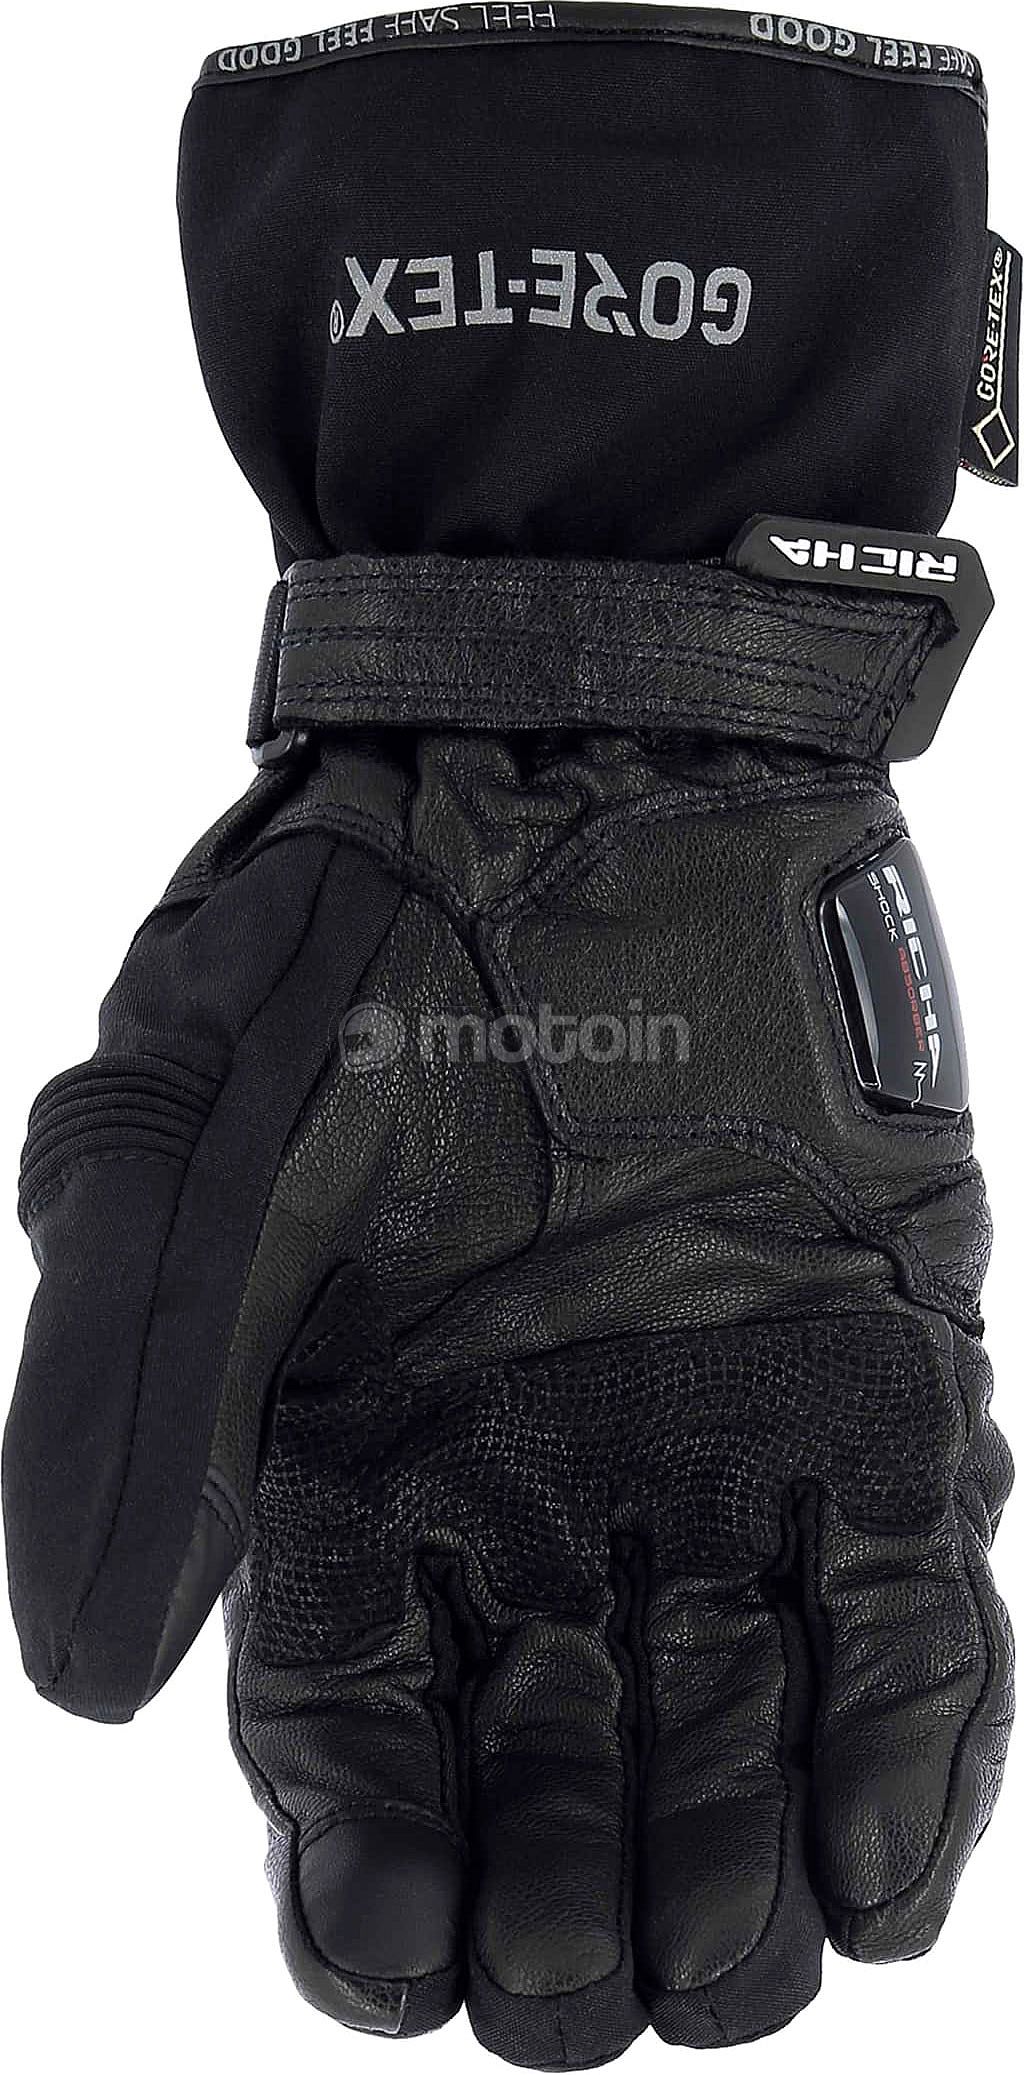 Richa TYPHOON Motorrad Motorrad Goretex wasserdicht Textil Handschuhe-Schwarz